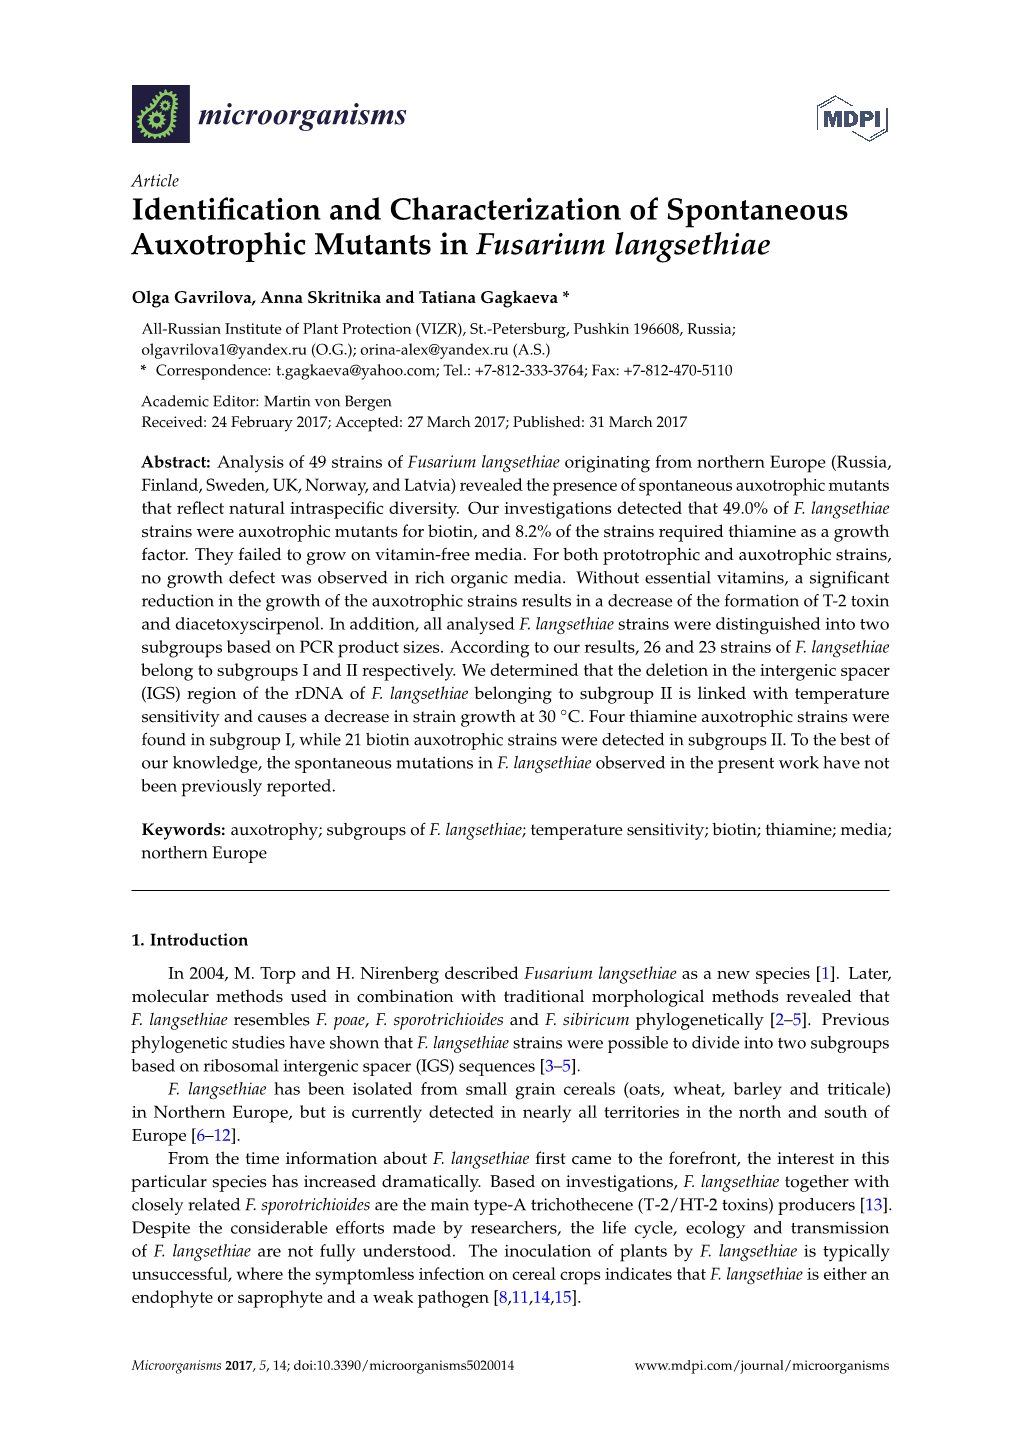 Identification and Characterization of Spontaneous Auxotrophic Mutants in Fusarium Langsethiae